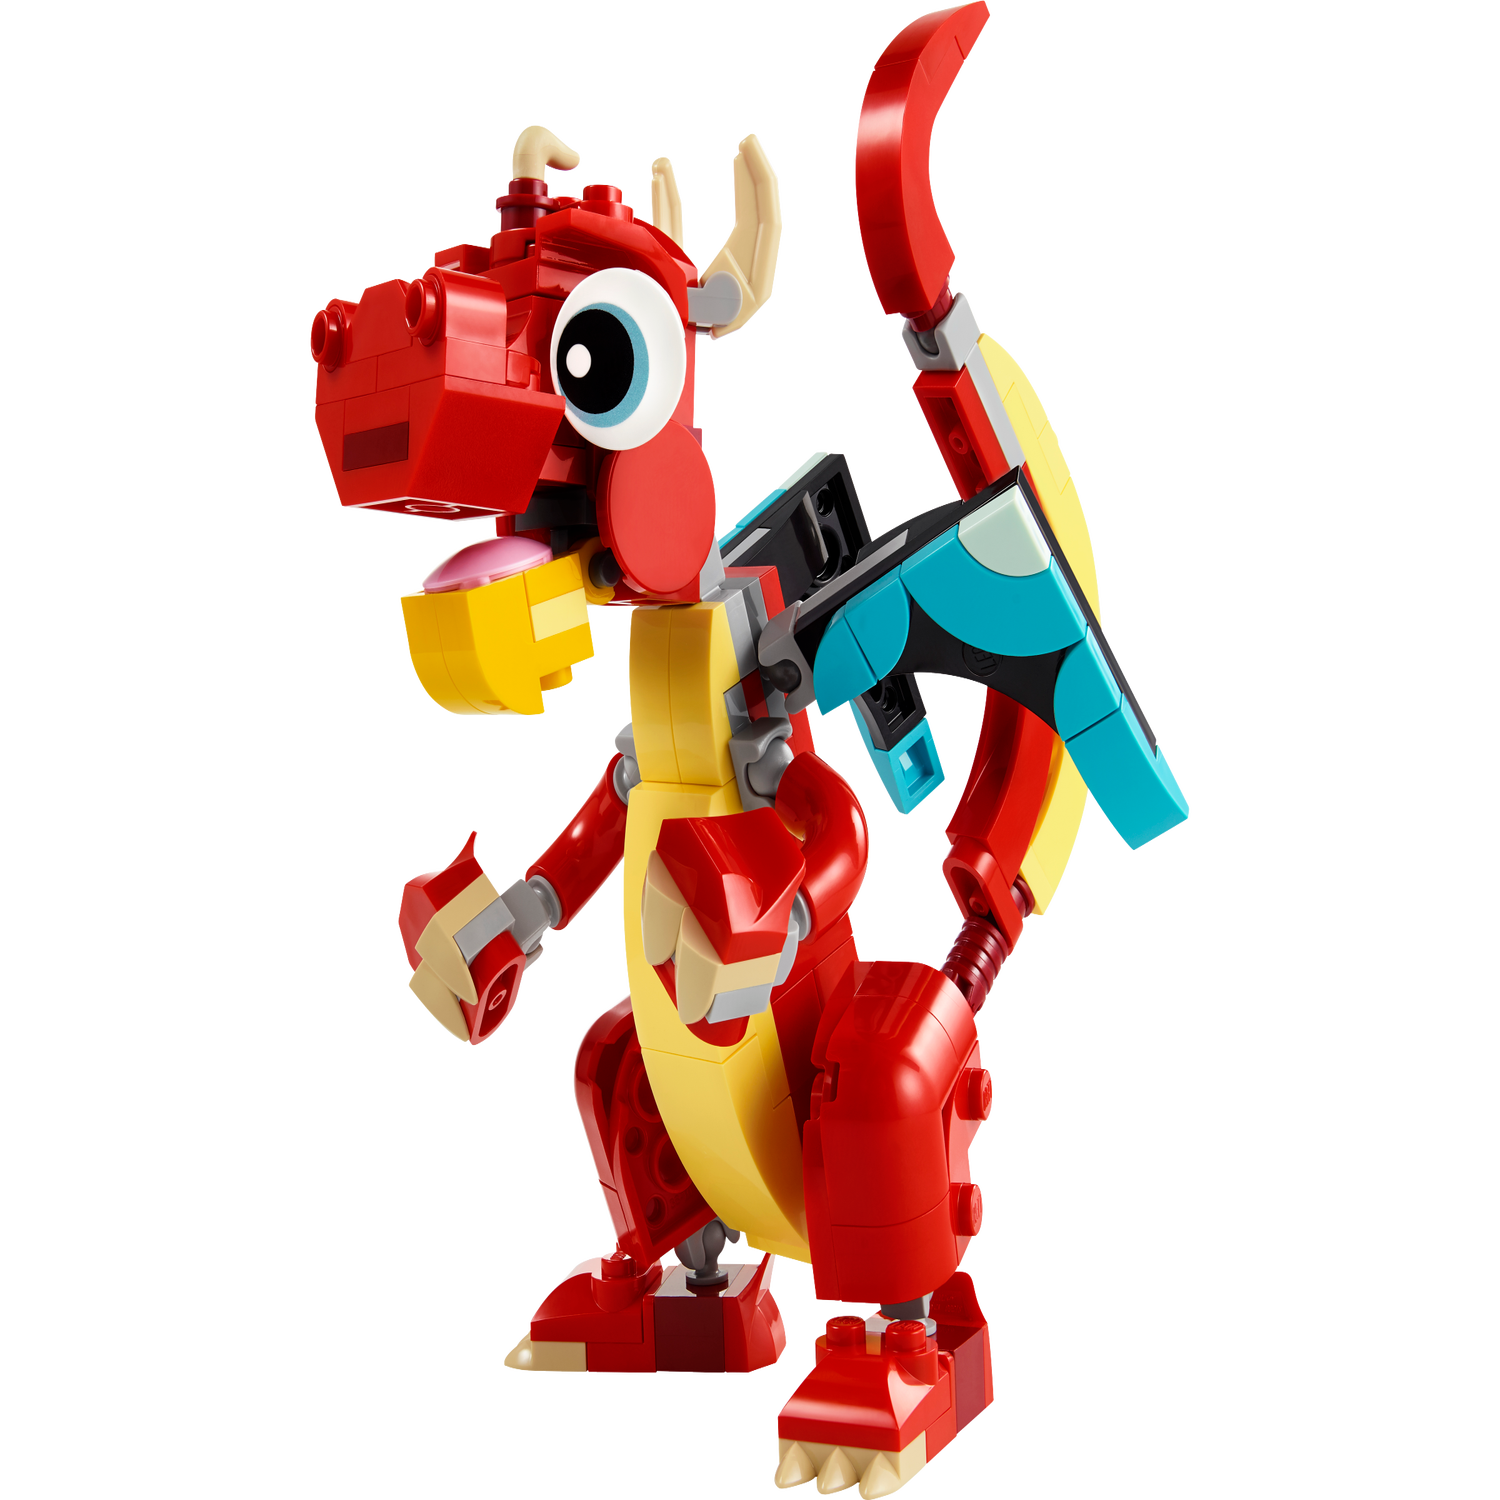 LEGO 31145 Drago rosso - 31145